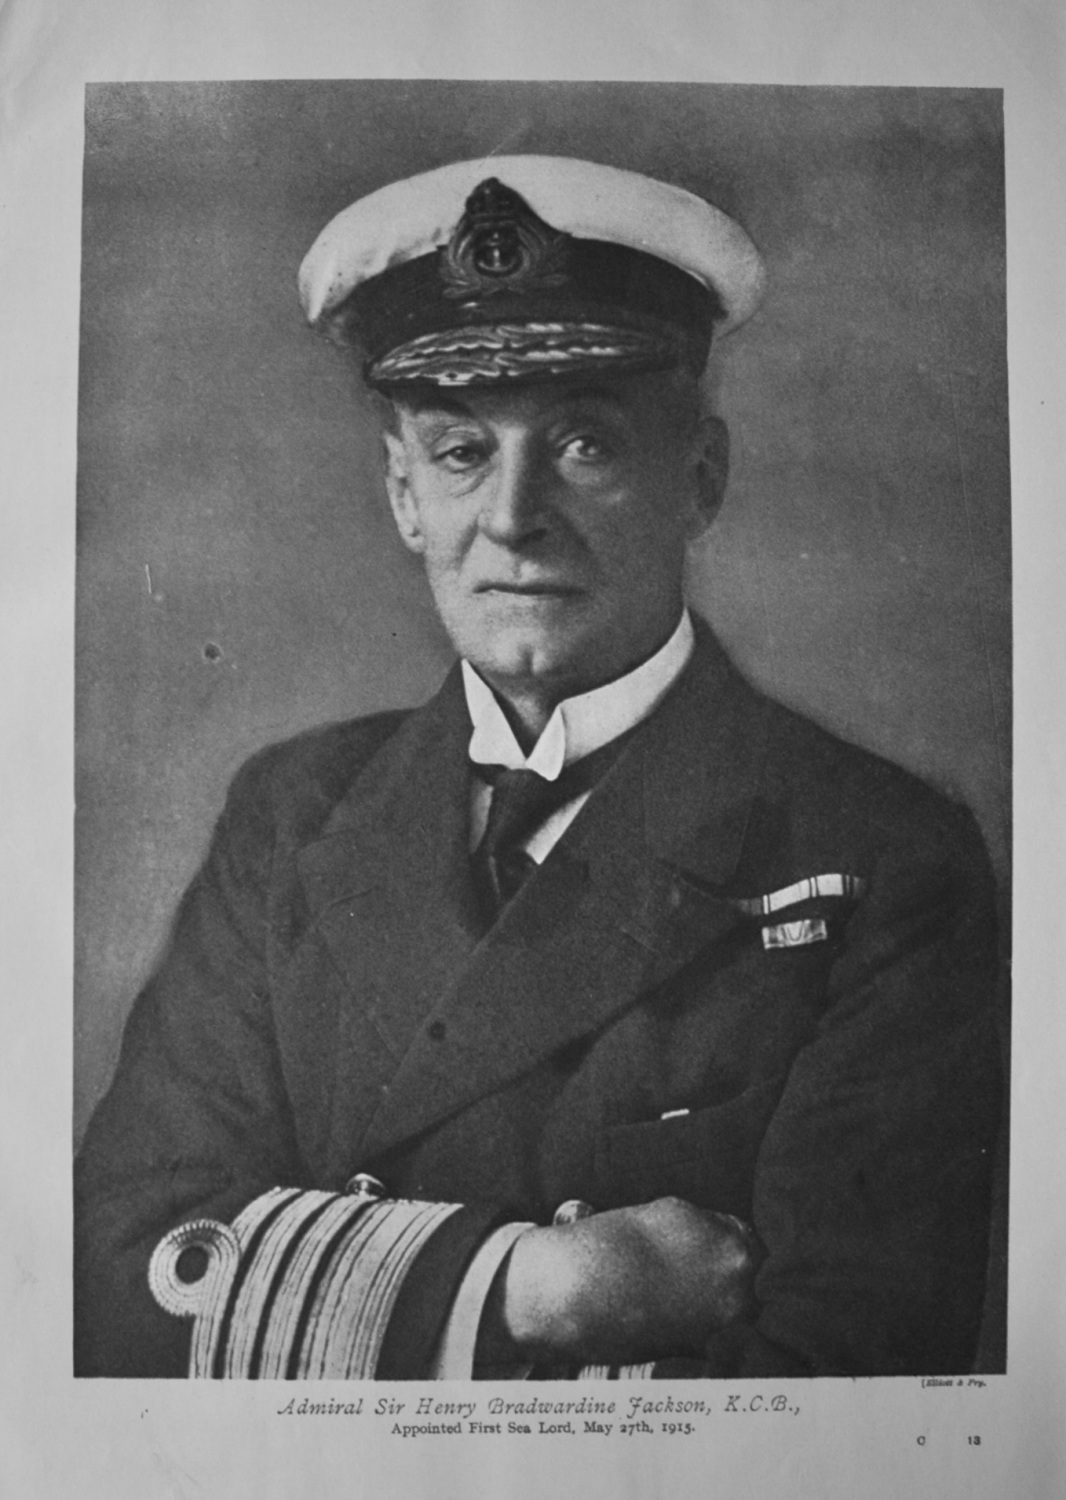 Admiral Sir Henry Bradwardine Jackson, K.C.B., Appointed First Sea Lord, Ma